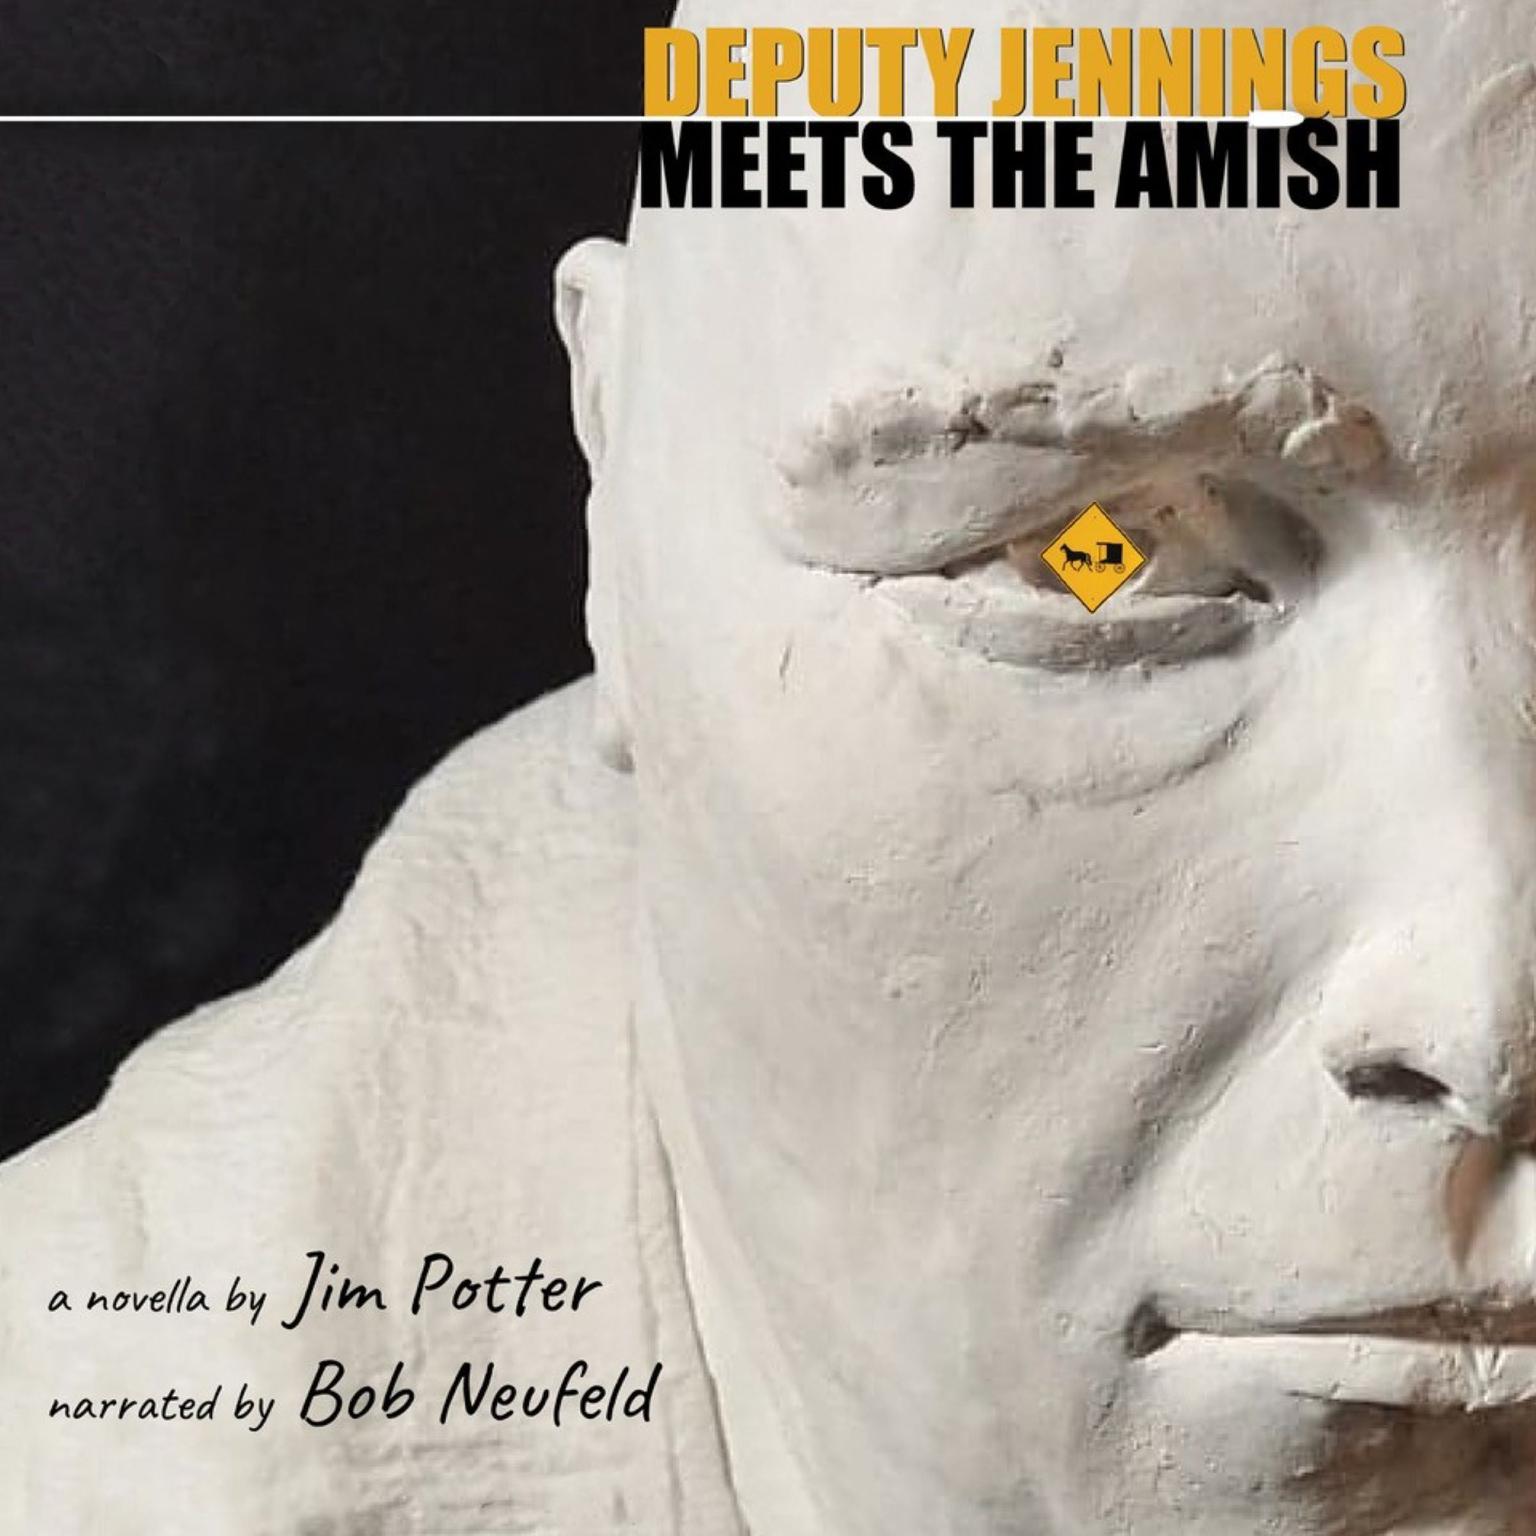 Deputy Jennings Meets the Amish: A Novella Audiobook, by Jim Potter